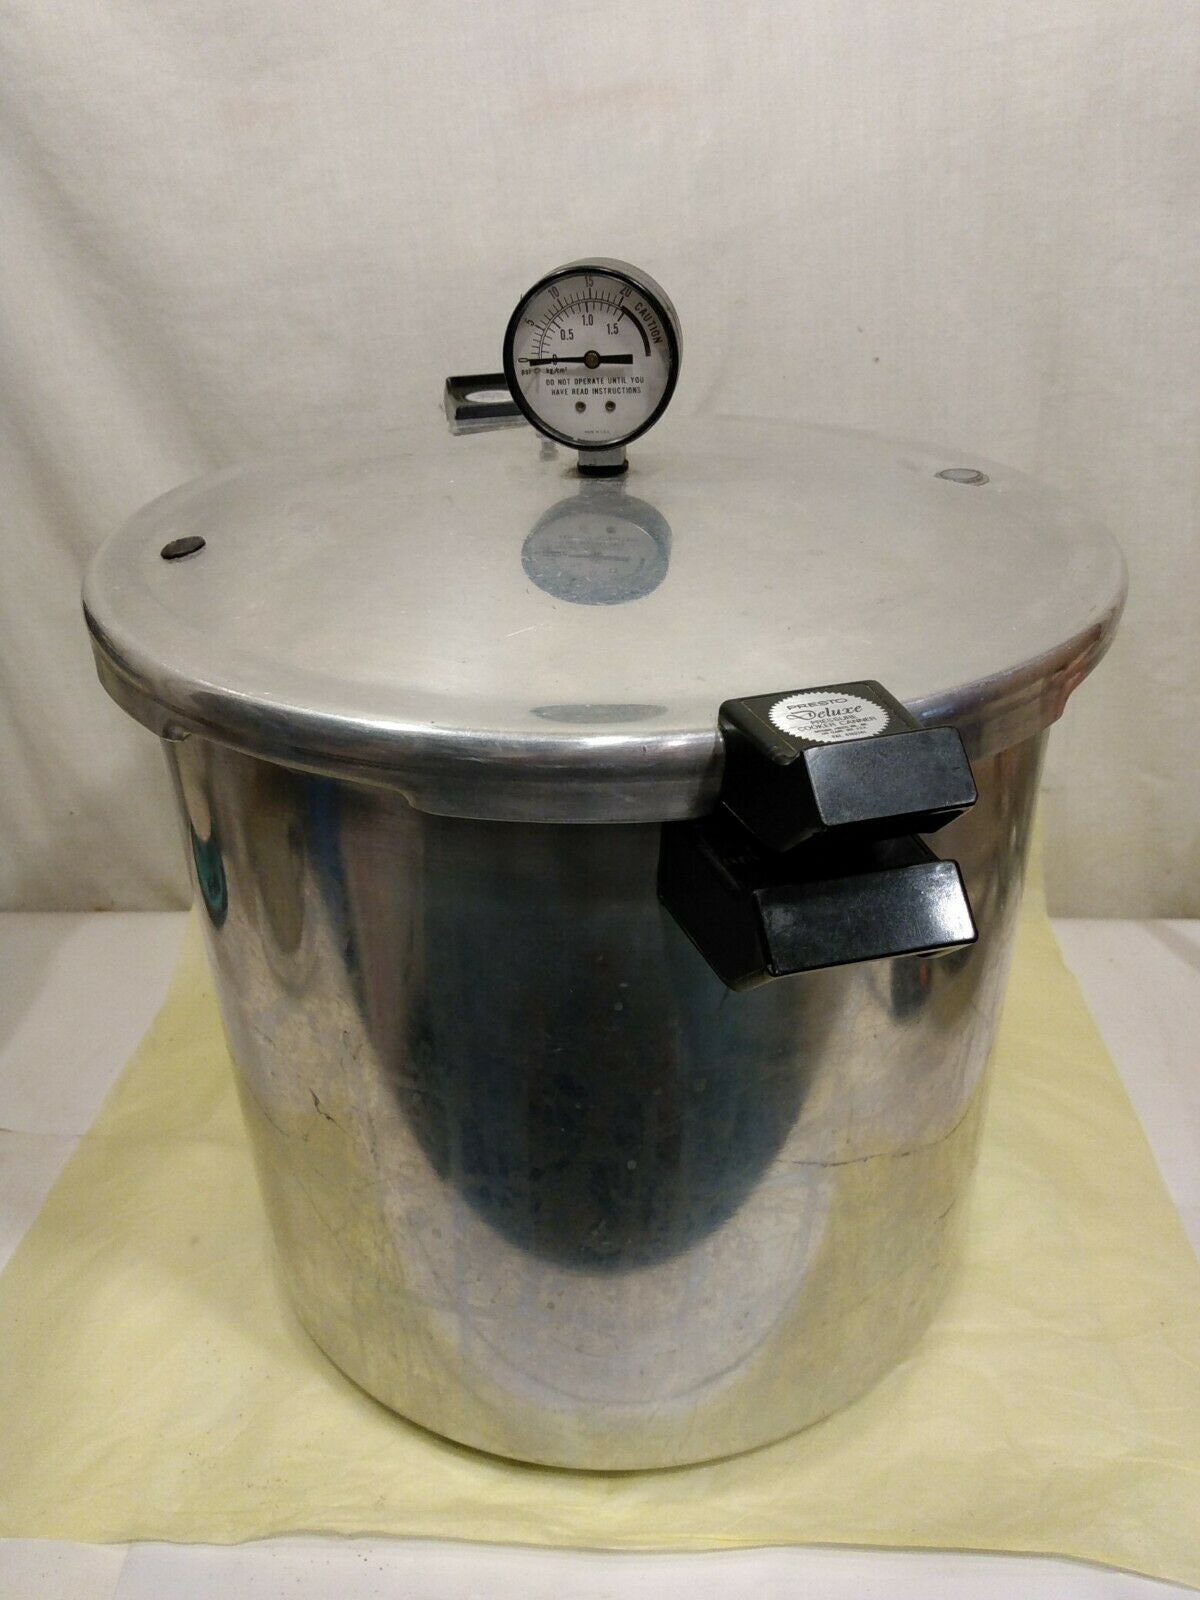 Wisconsin Aluminum Pressure Cooker / Canner 15.5 Qt.